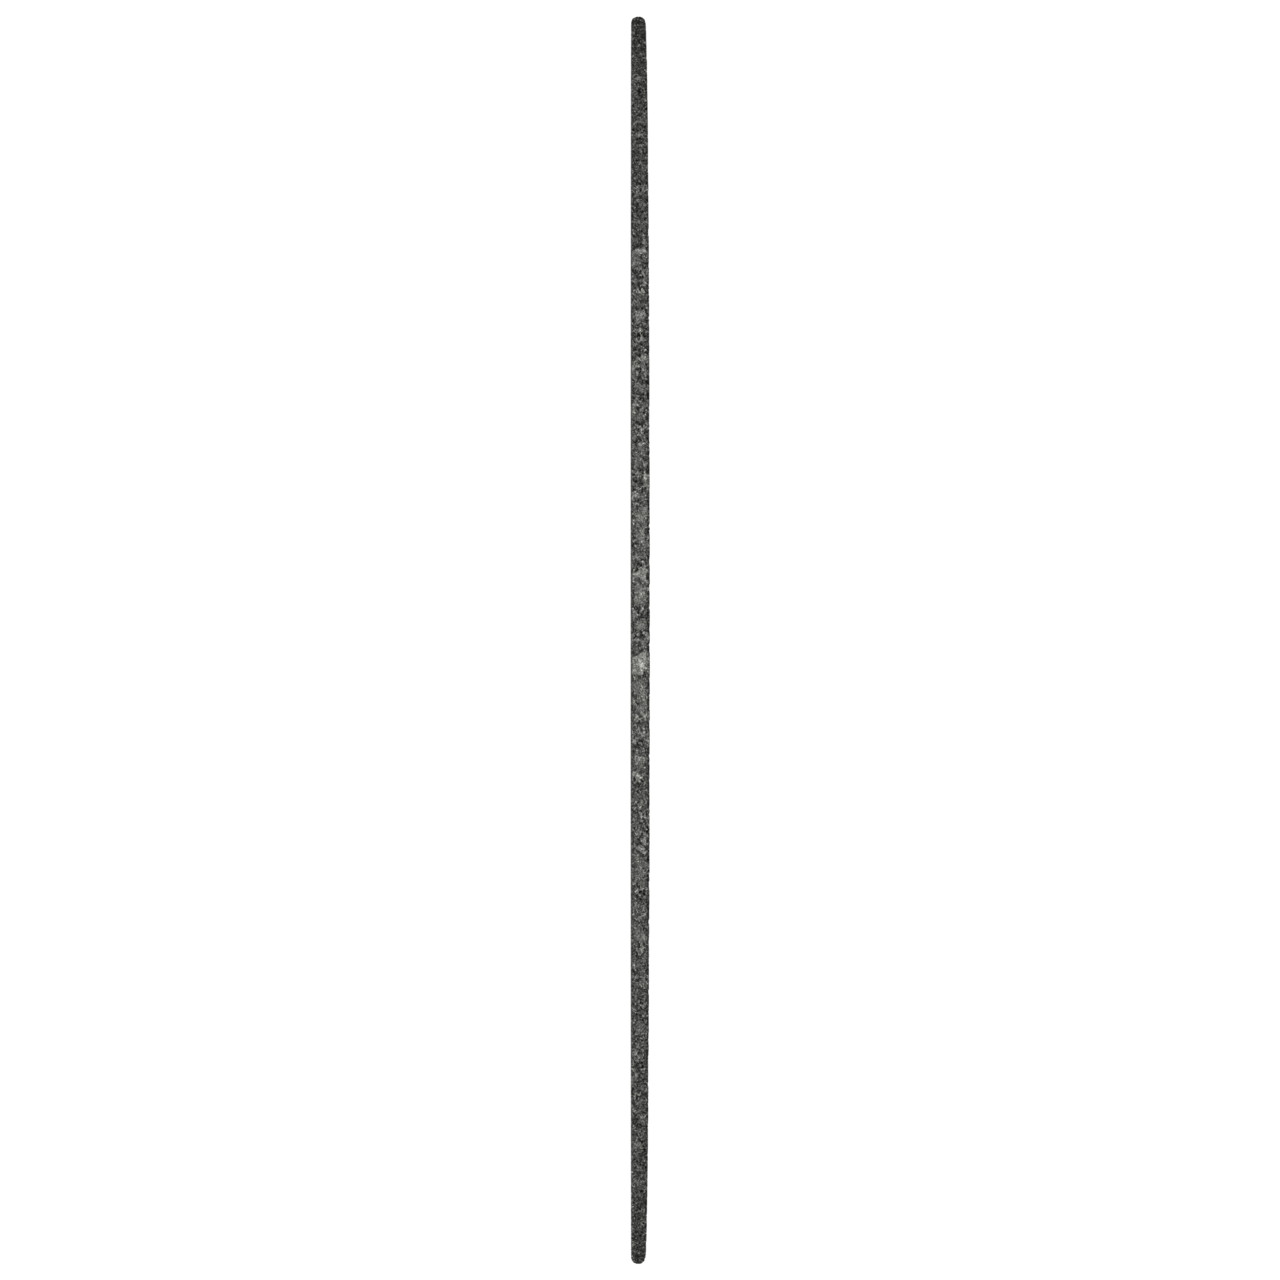 Dischi da taglio Tyrolit DxDxH 50x1x10 Per acciaio inox, forma: 41 - versione diritta, Art. 323978